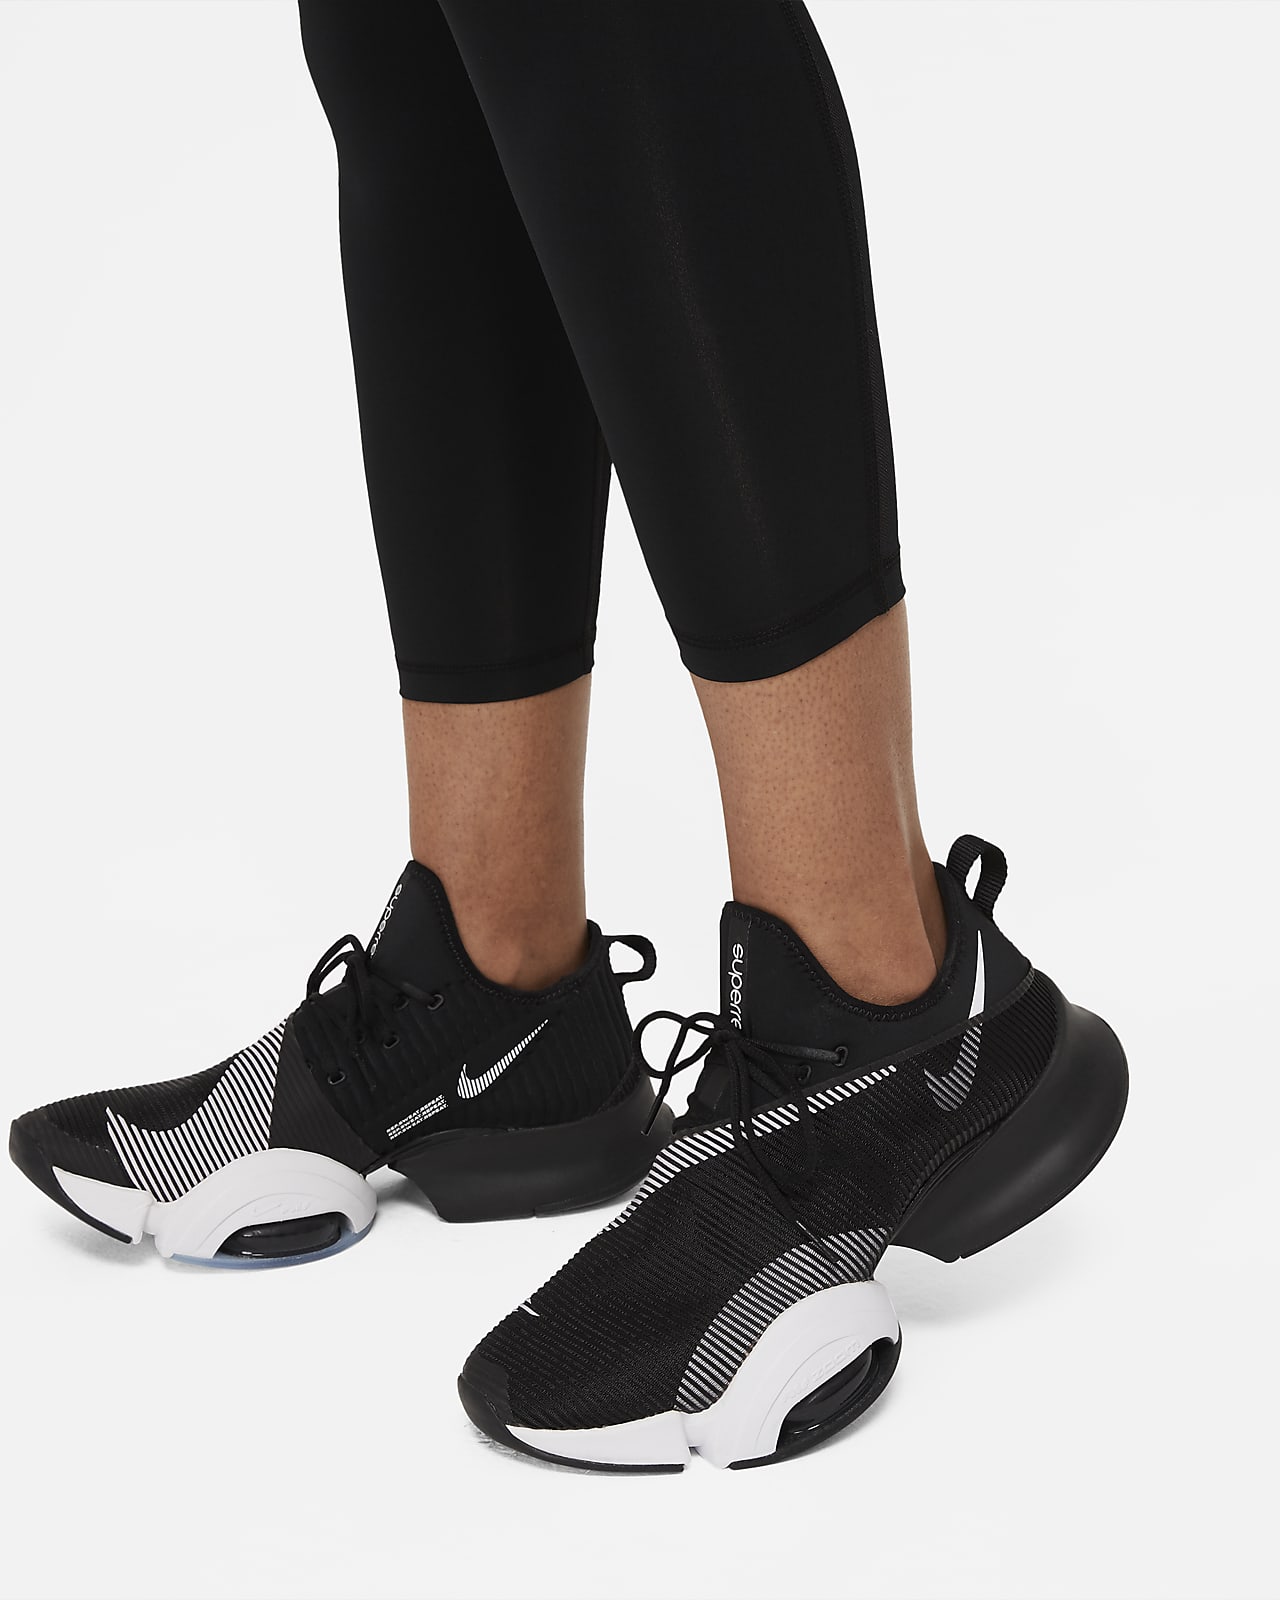 Legging Nike Pro 365 Feminina - Preto